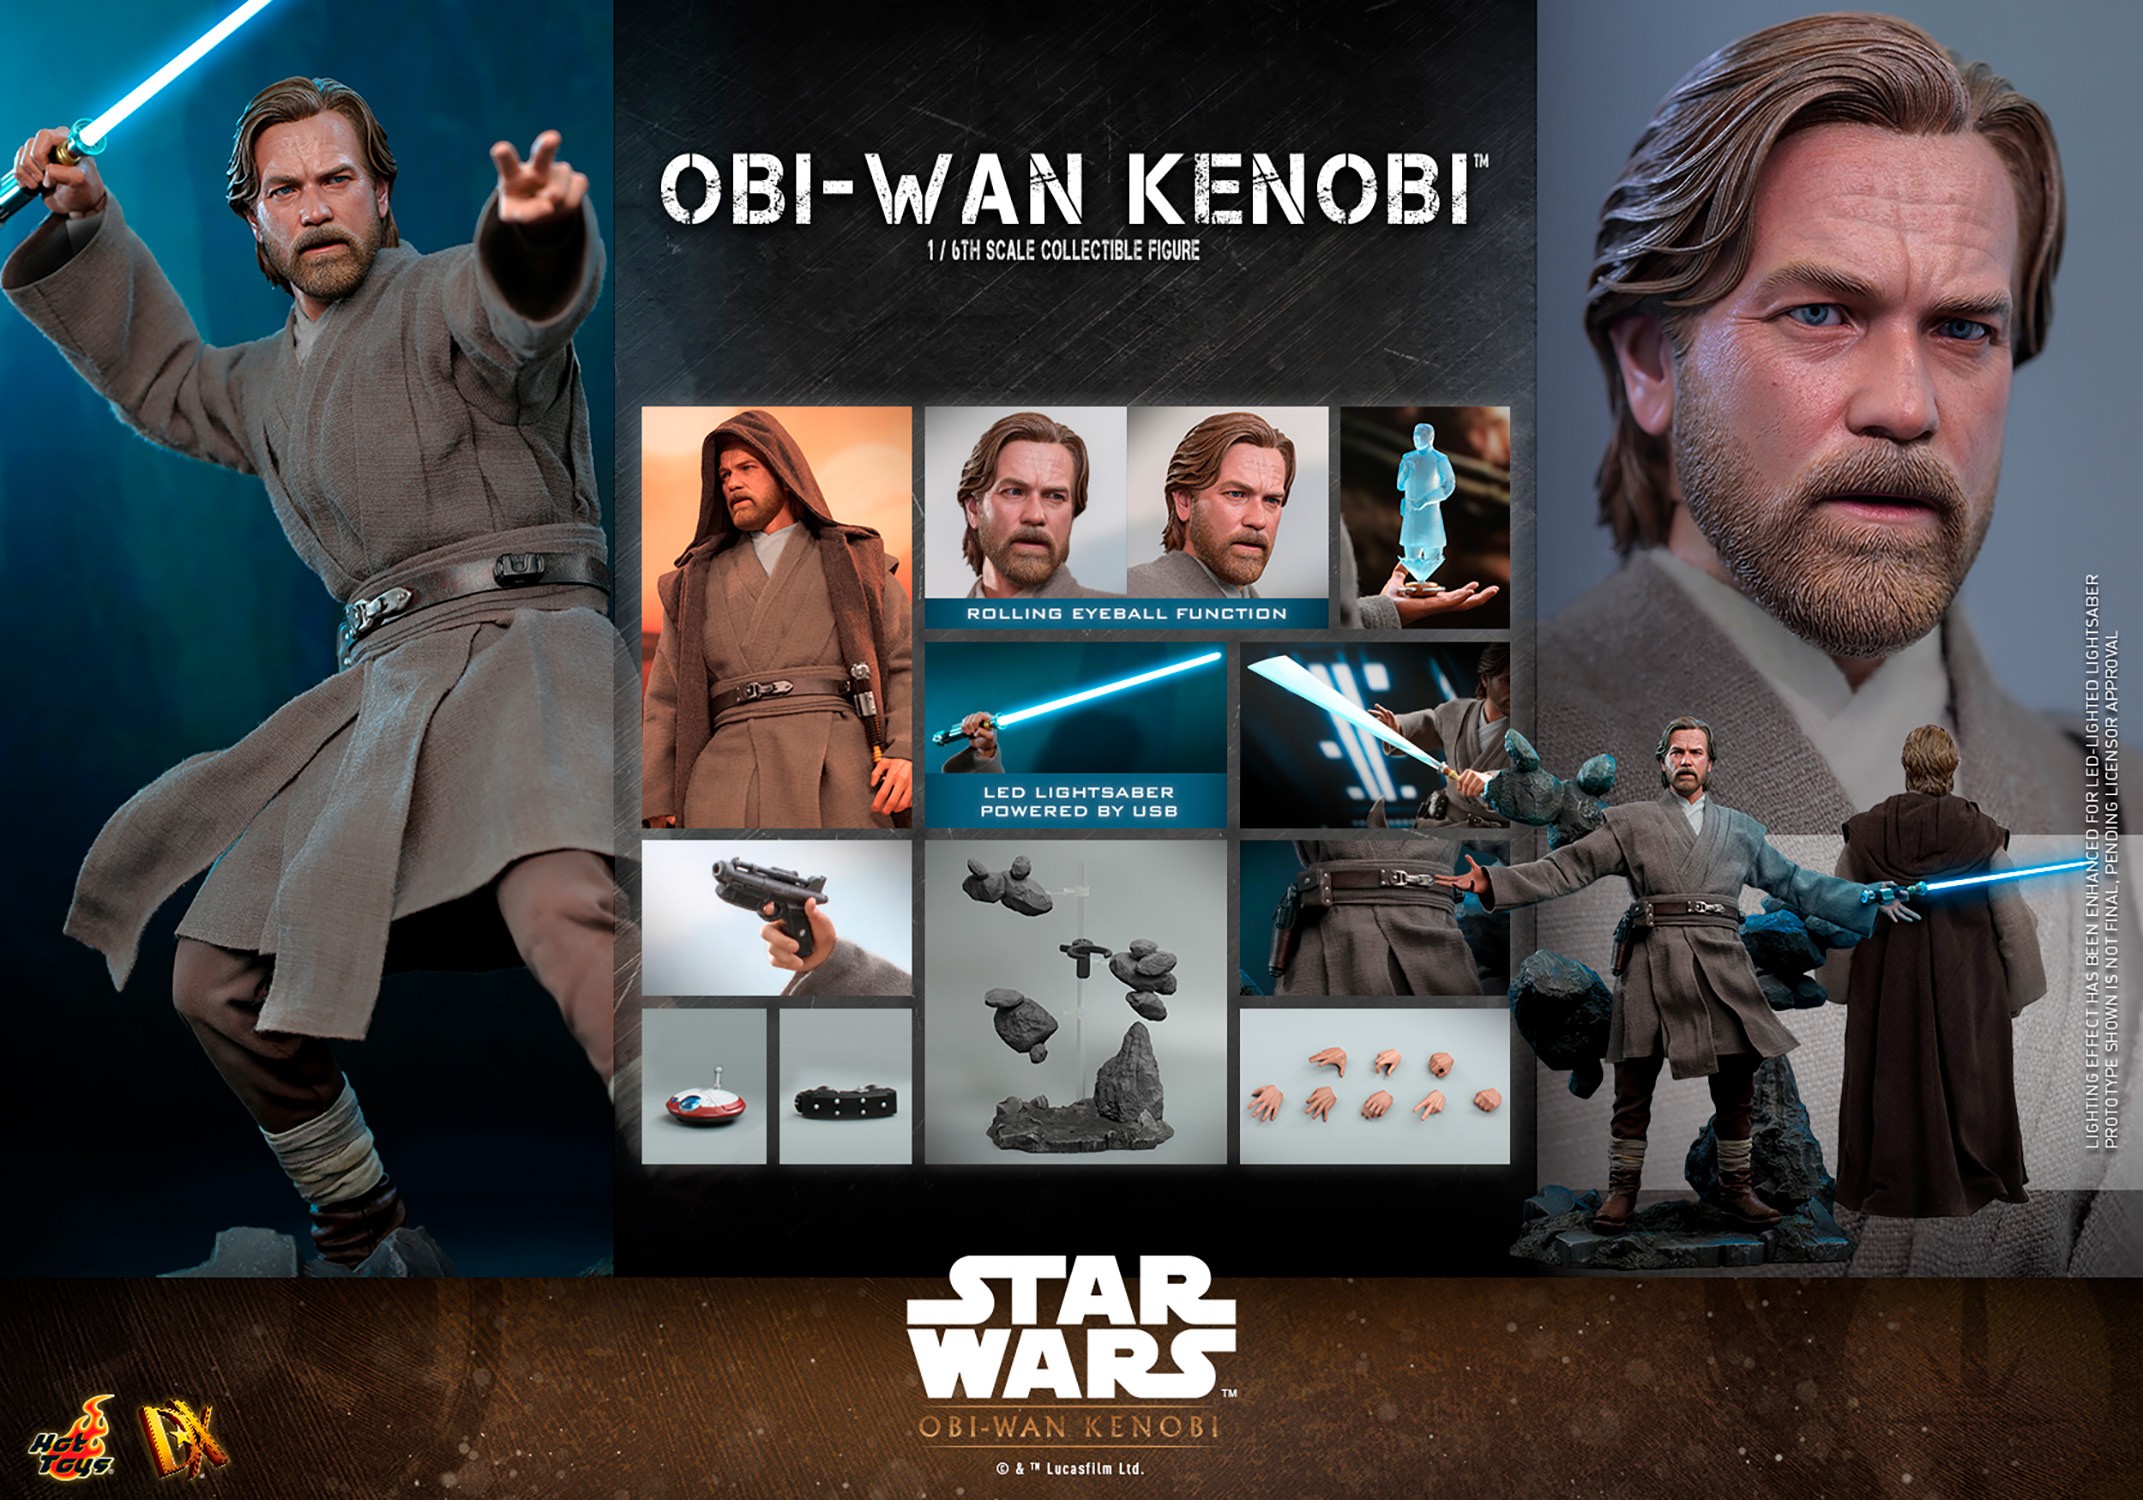 Obi-Wan Kenobi Collector Edition (Prototype Shown) View 21